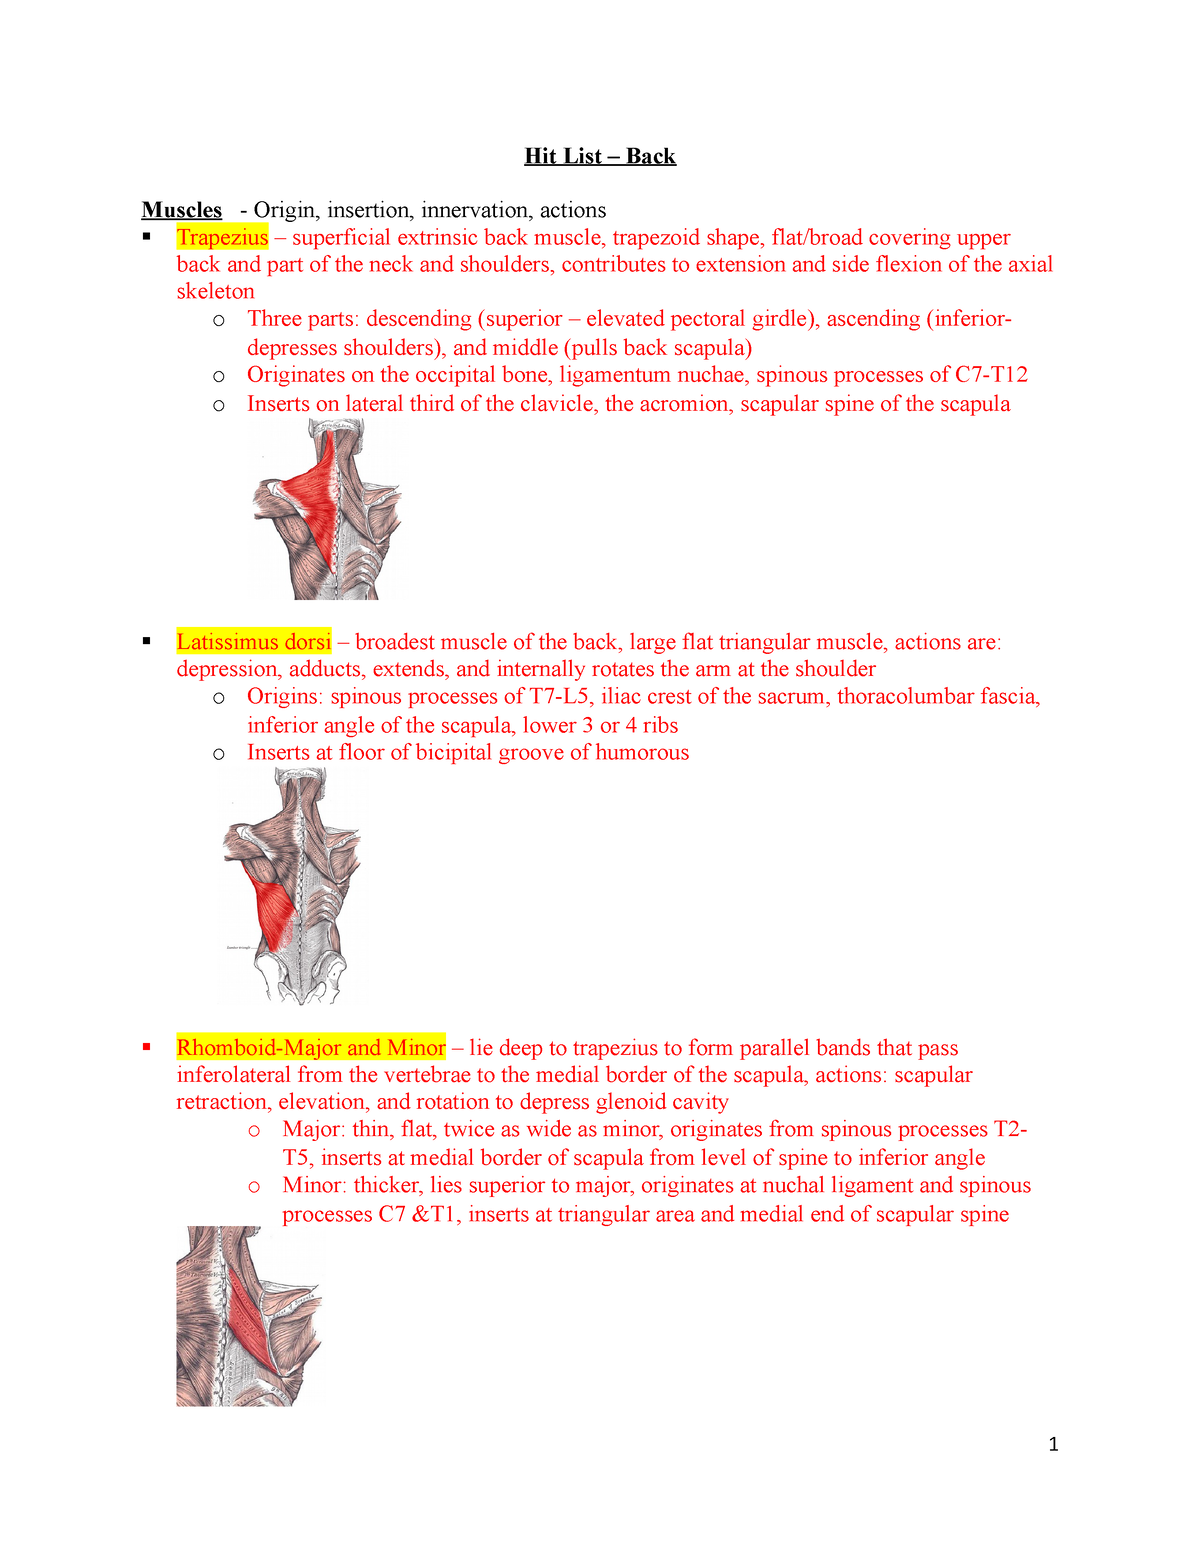 Back Anatomy - Hit List – Back Muscles - Origin, insertion, innervation ...